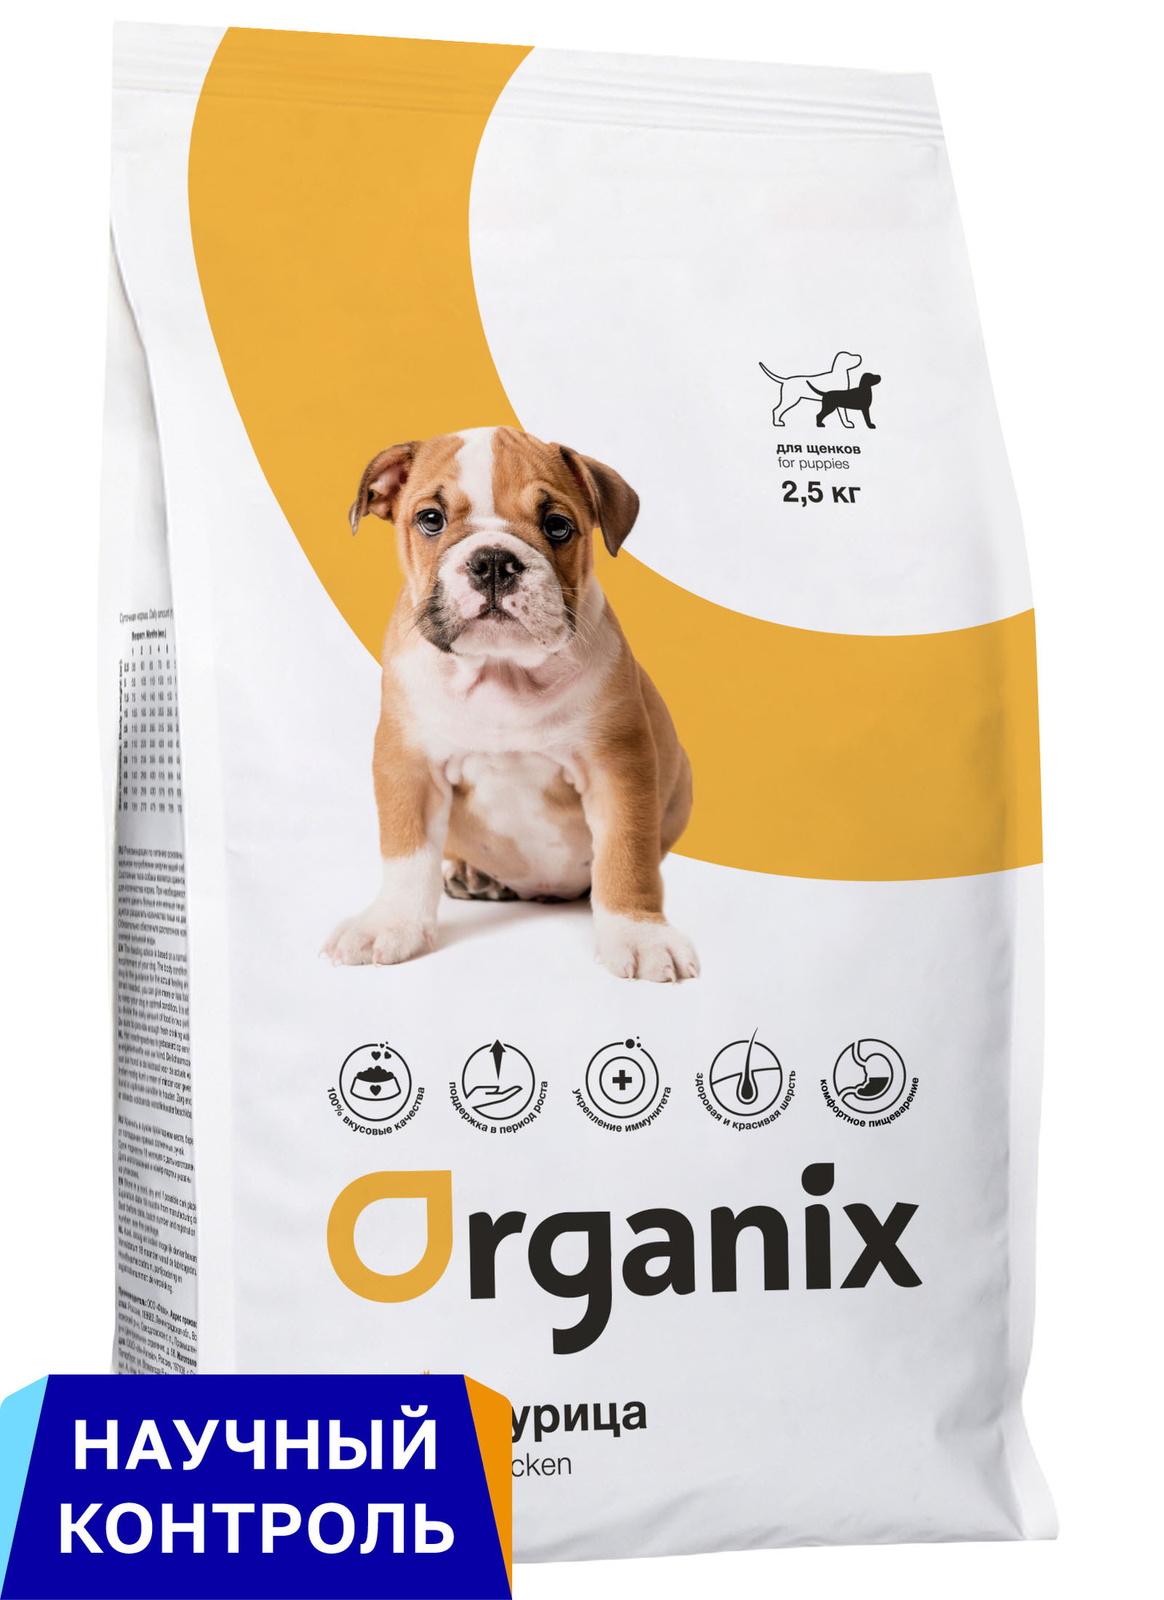 Organix Organix сухой корм для щенков (2,5 кг)